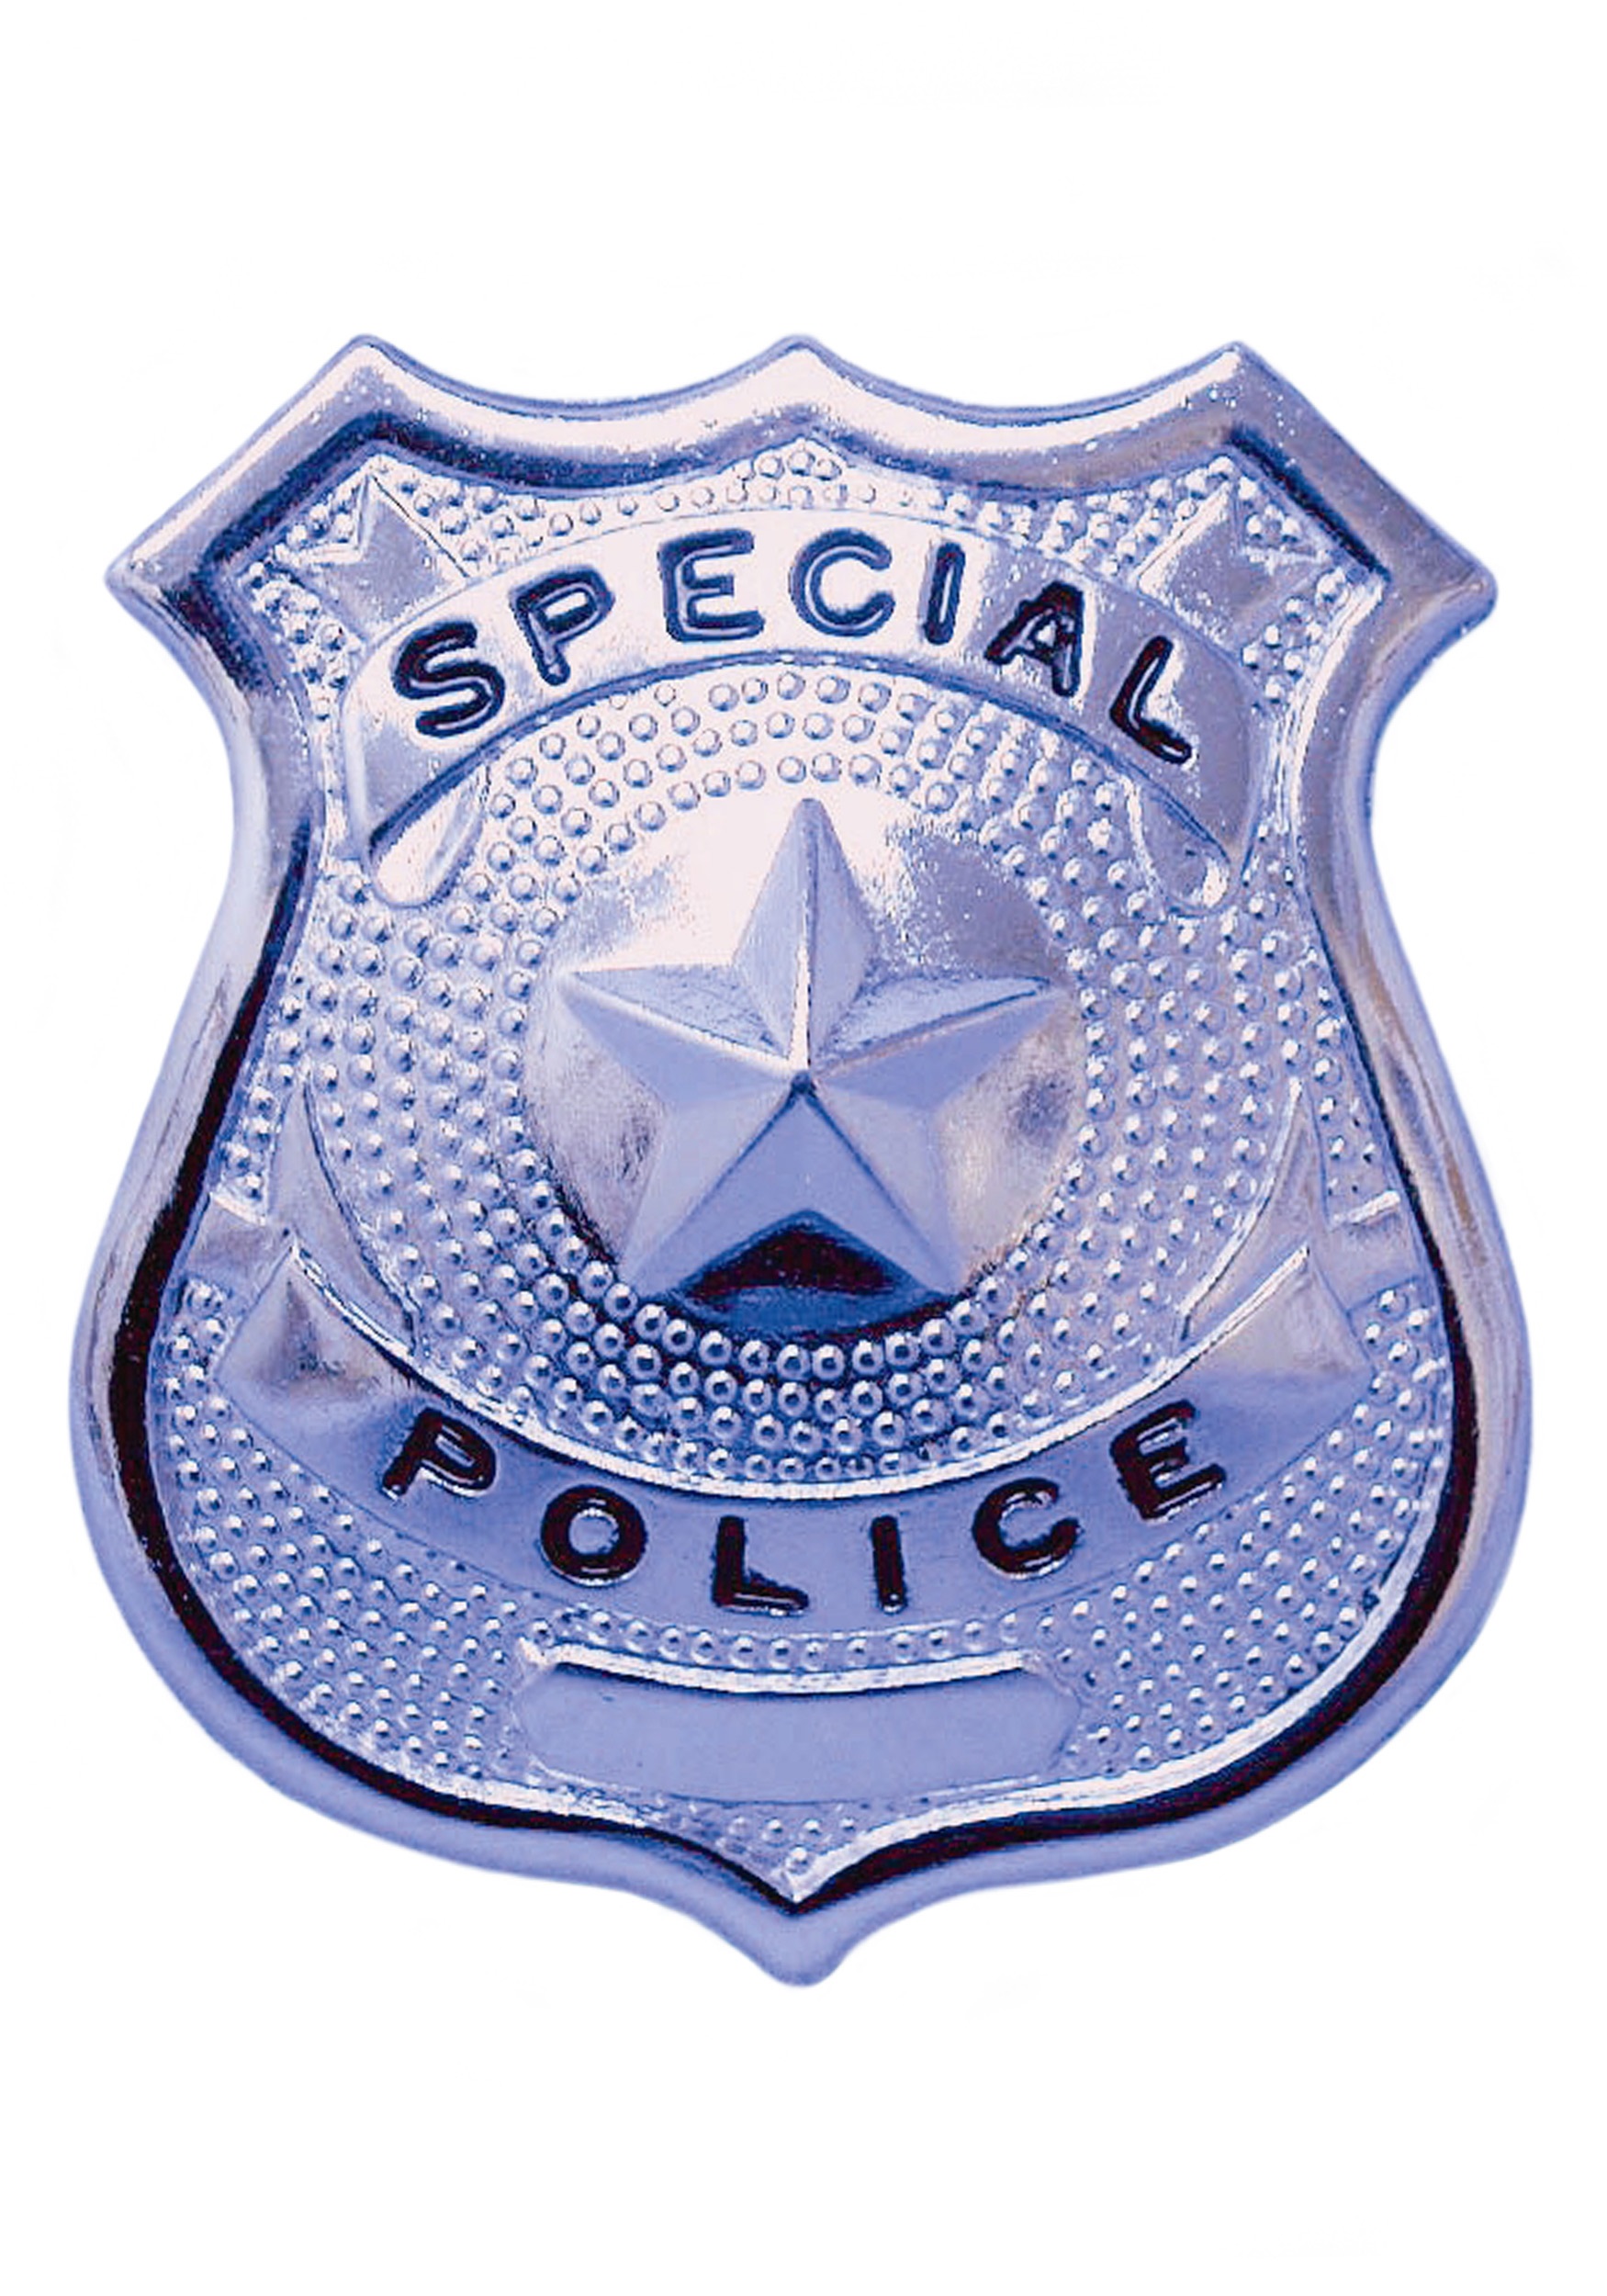 Authentic Cop Badge Accessory